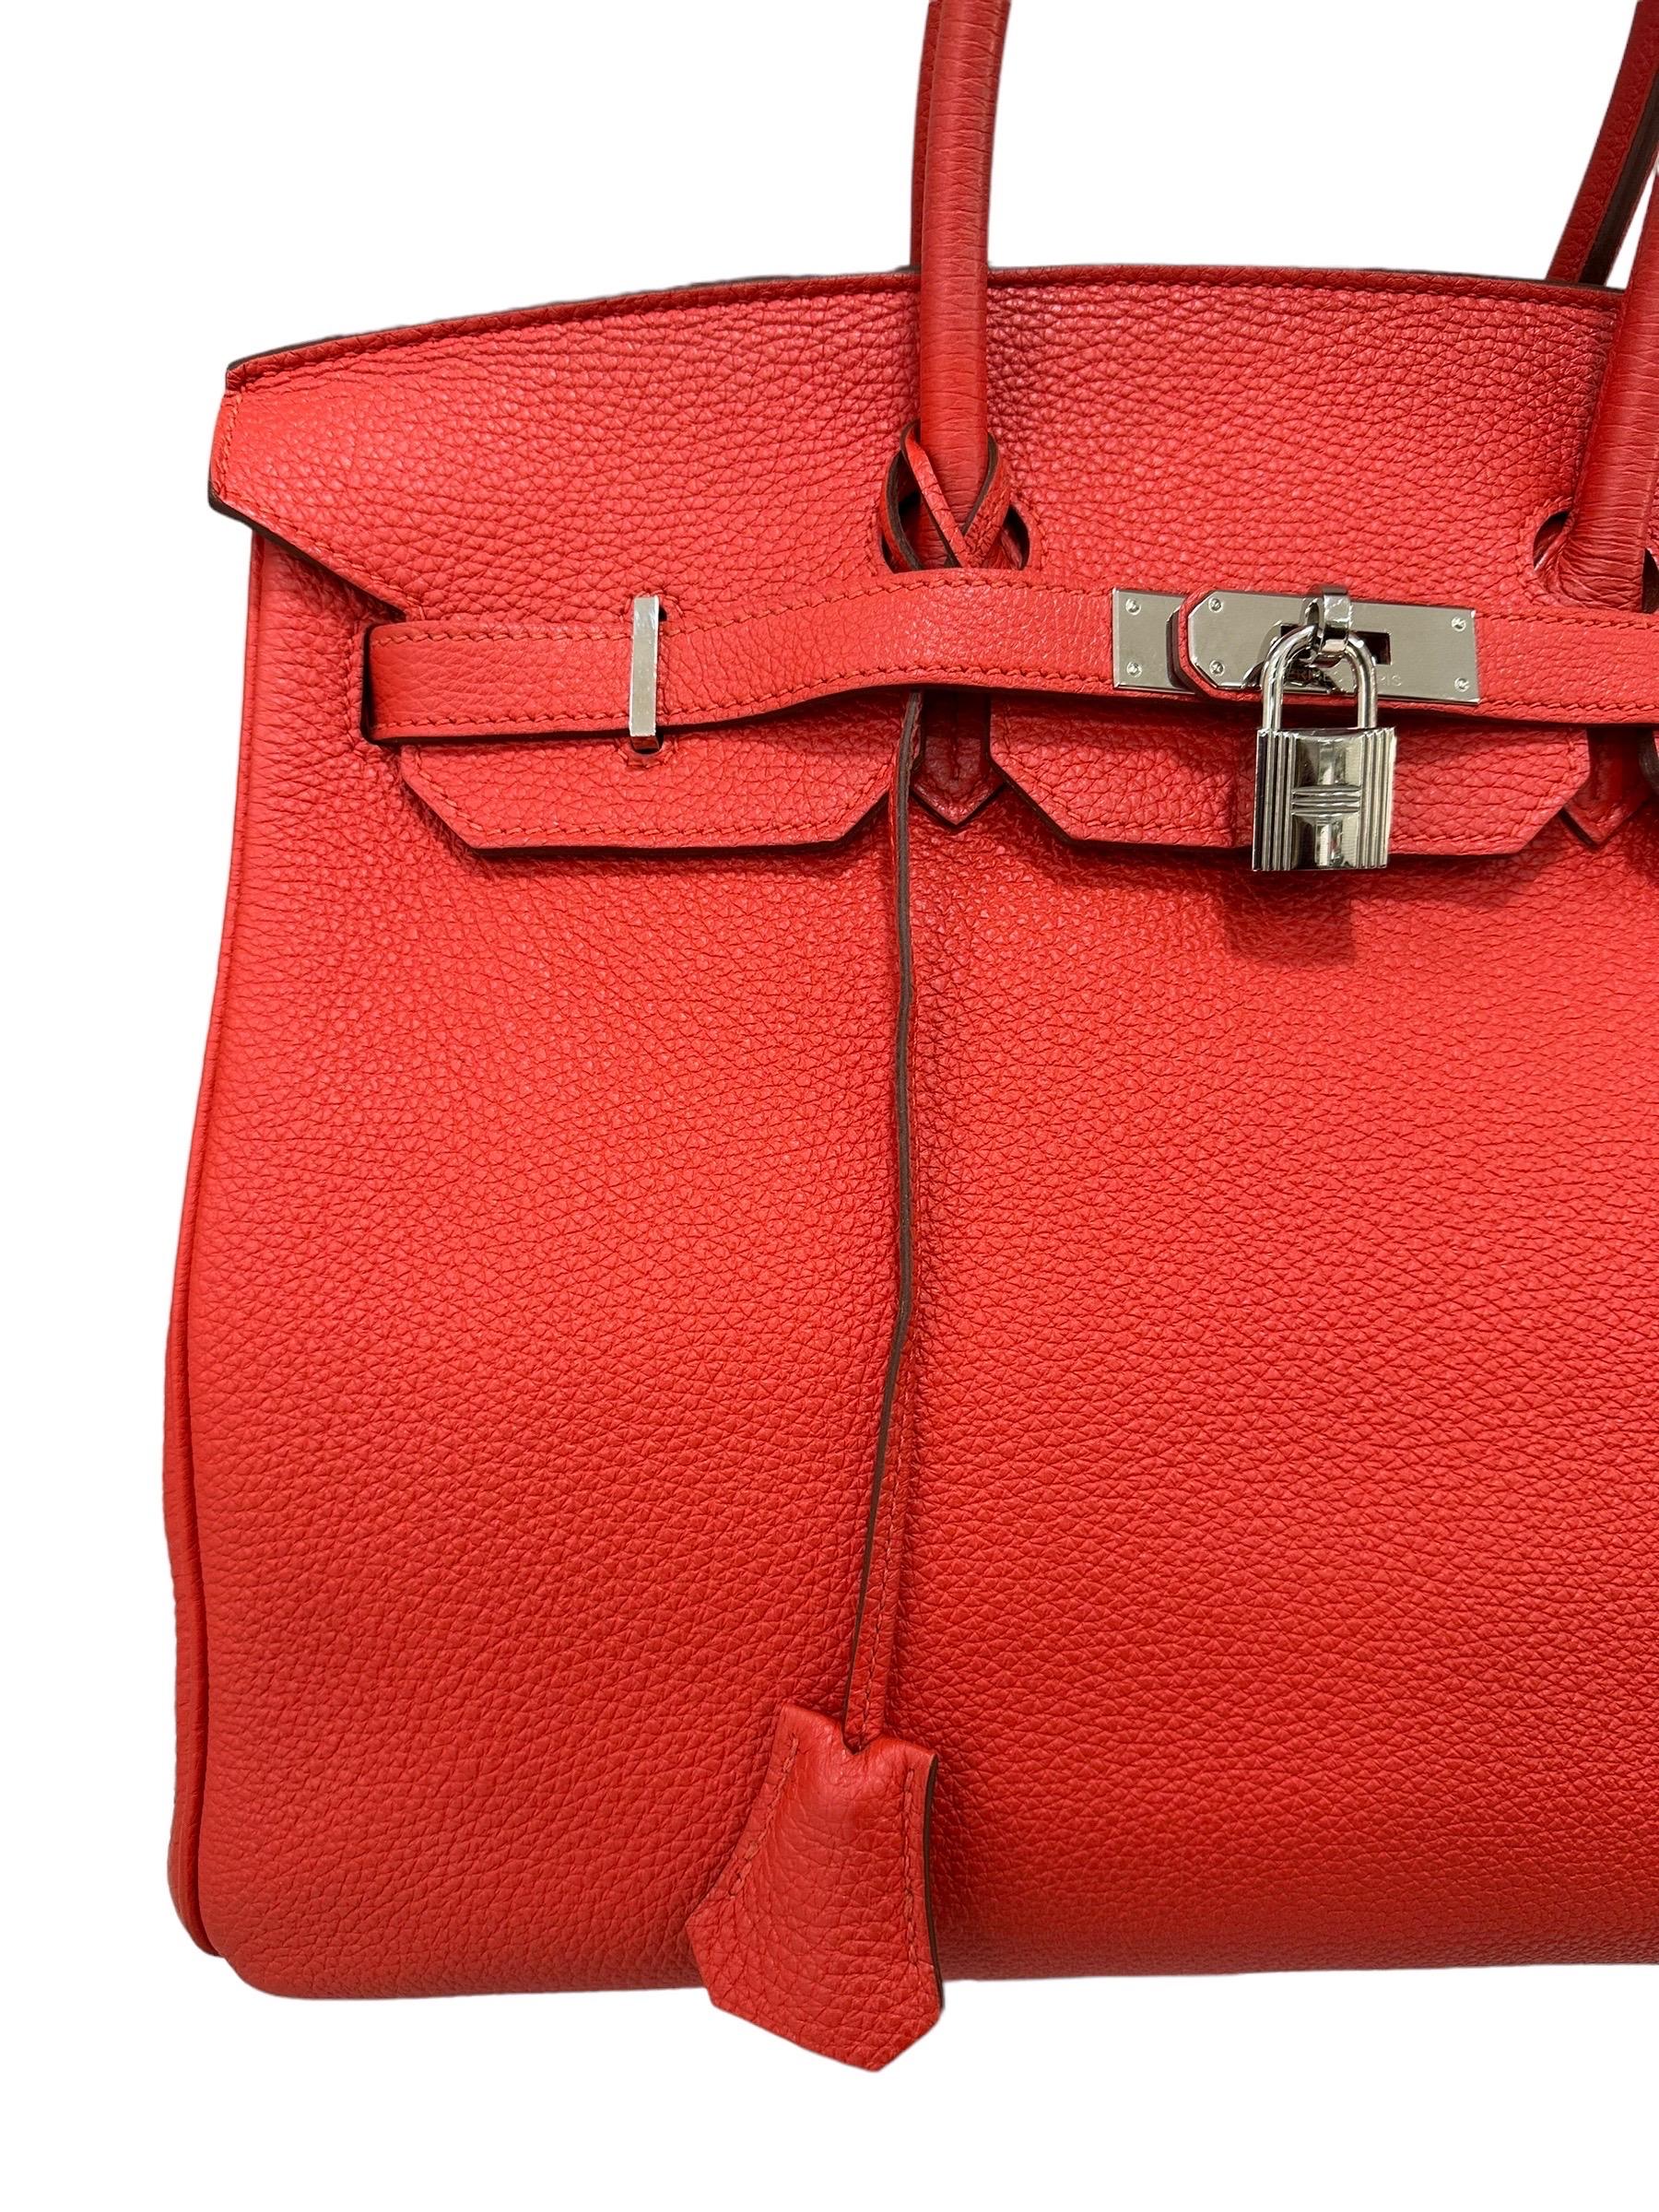 2011 Hermès Birkin 35 Togo Leather Rouge Capucine Top Handle Bag en vente 10